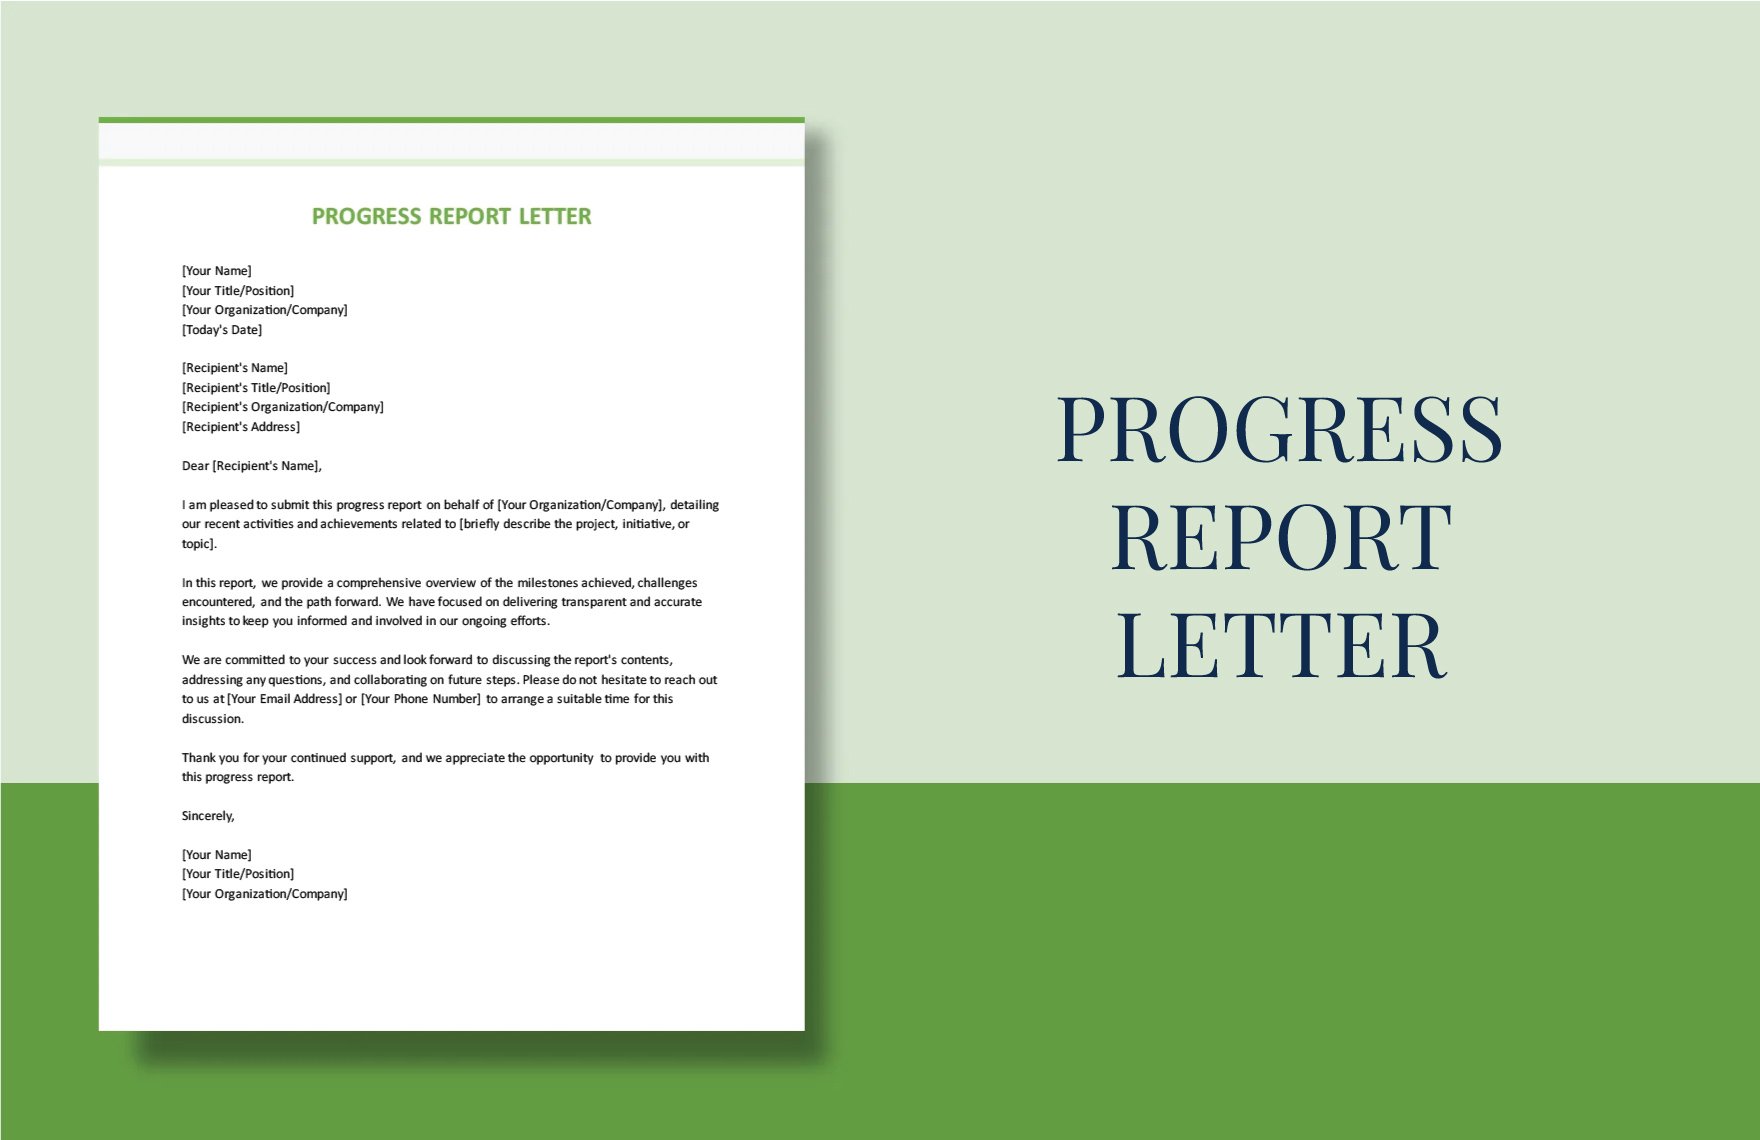 Progress Report Letter in Word, Google Docs, PDF